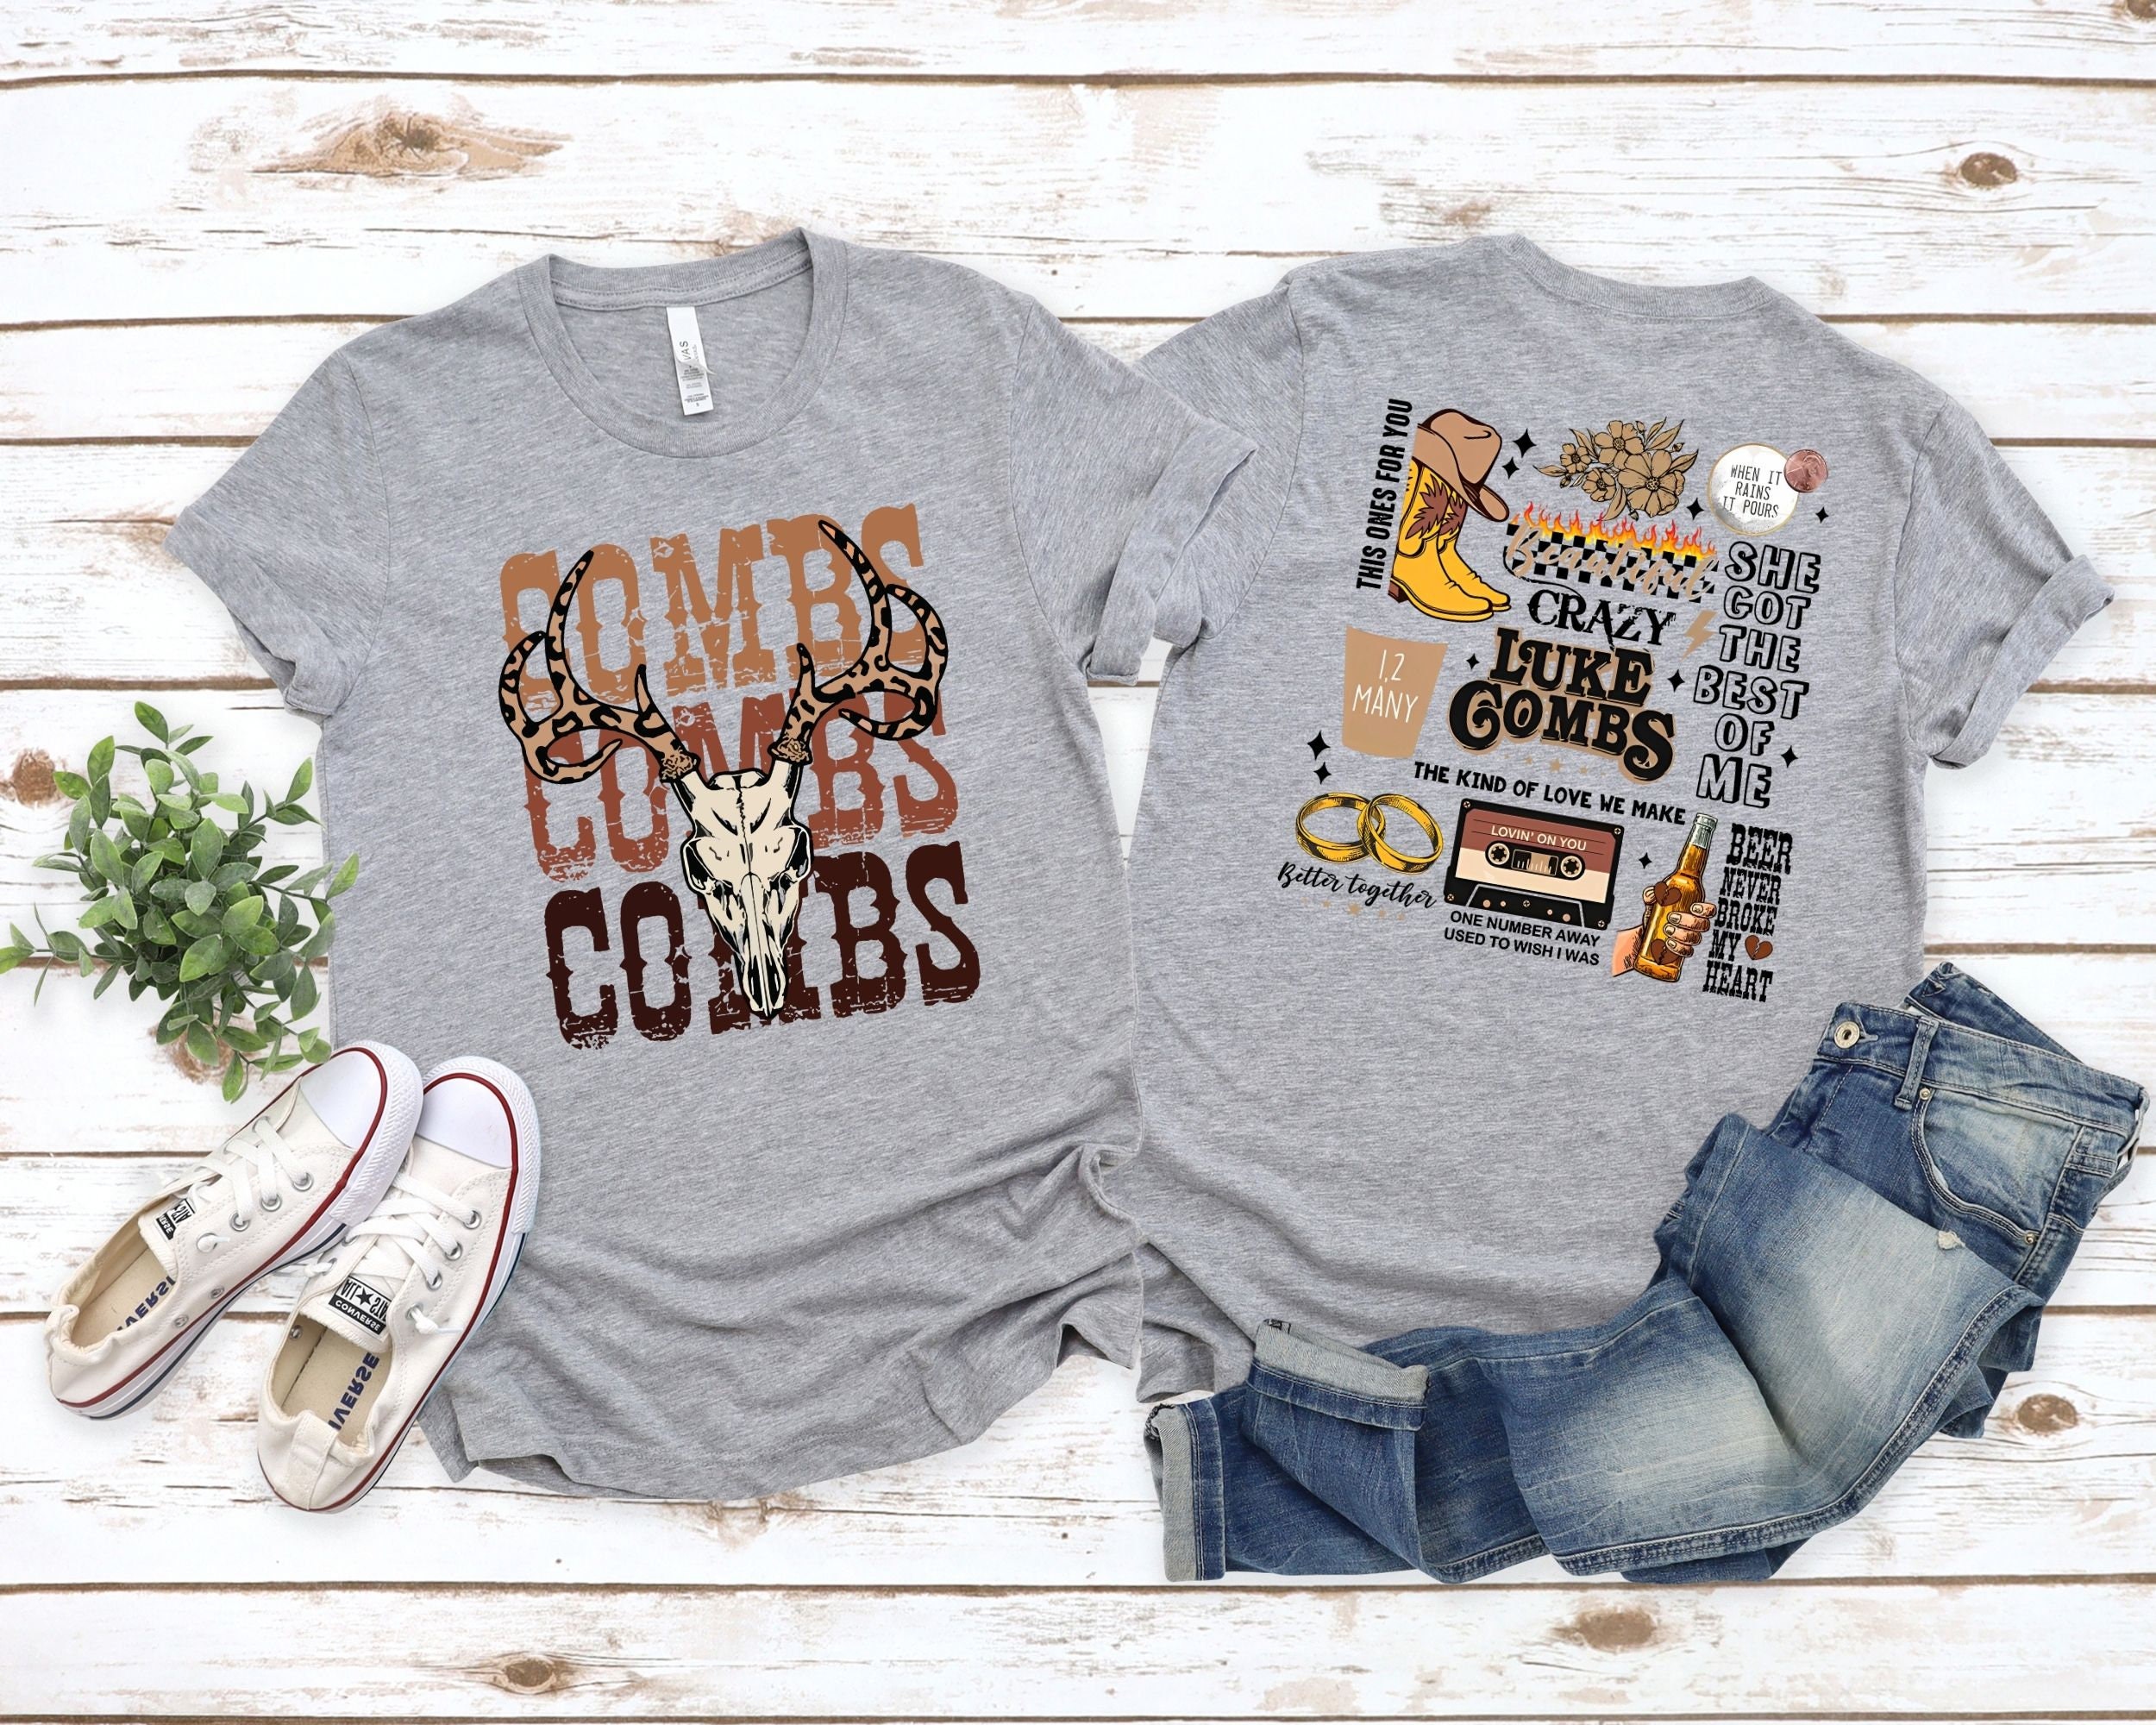 Combs Bullhead Shirt Two Side Print, Country Music Shirt